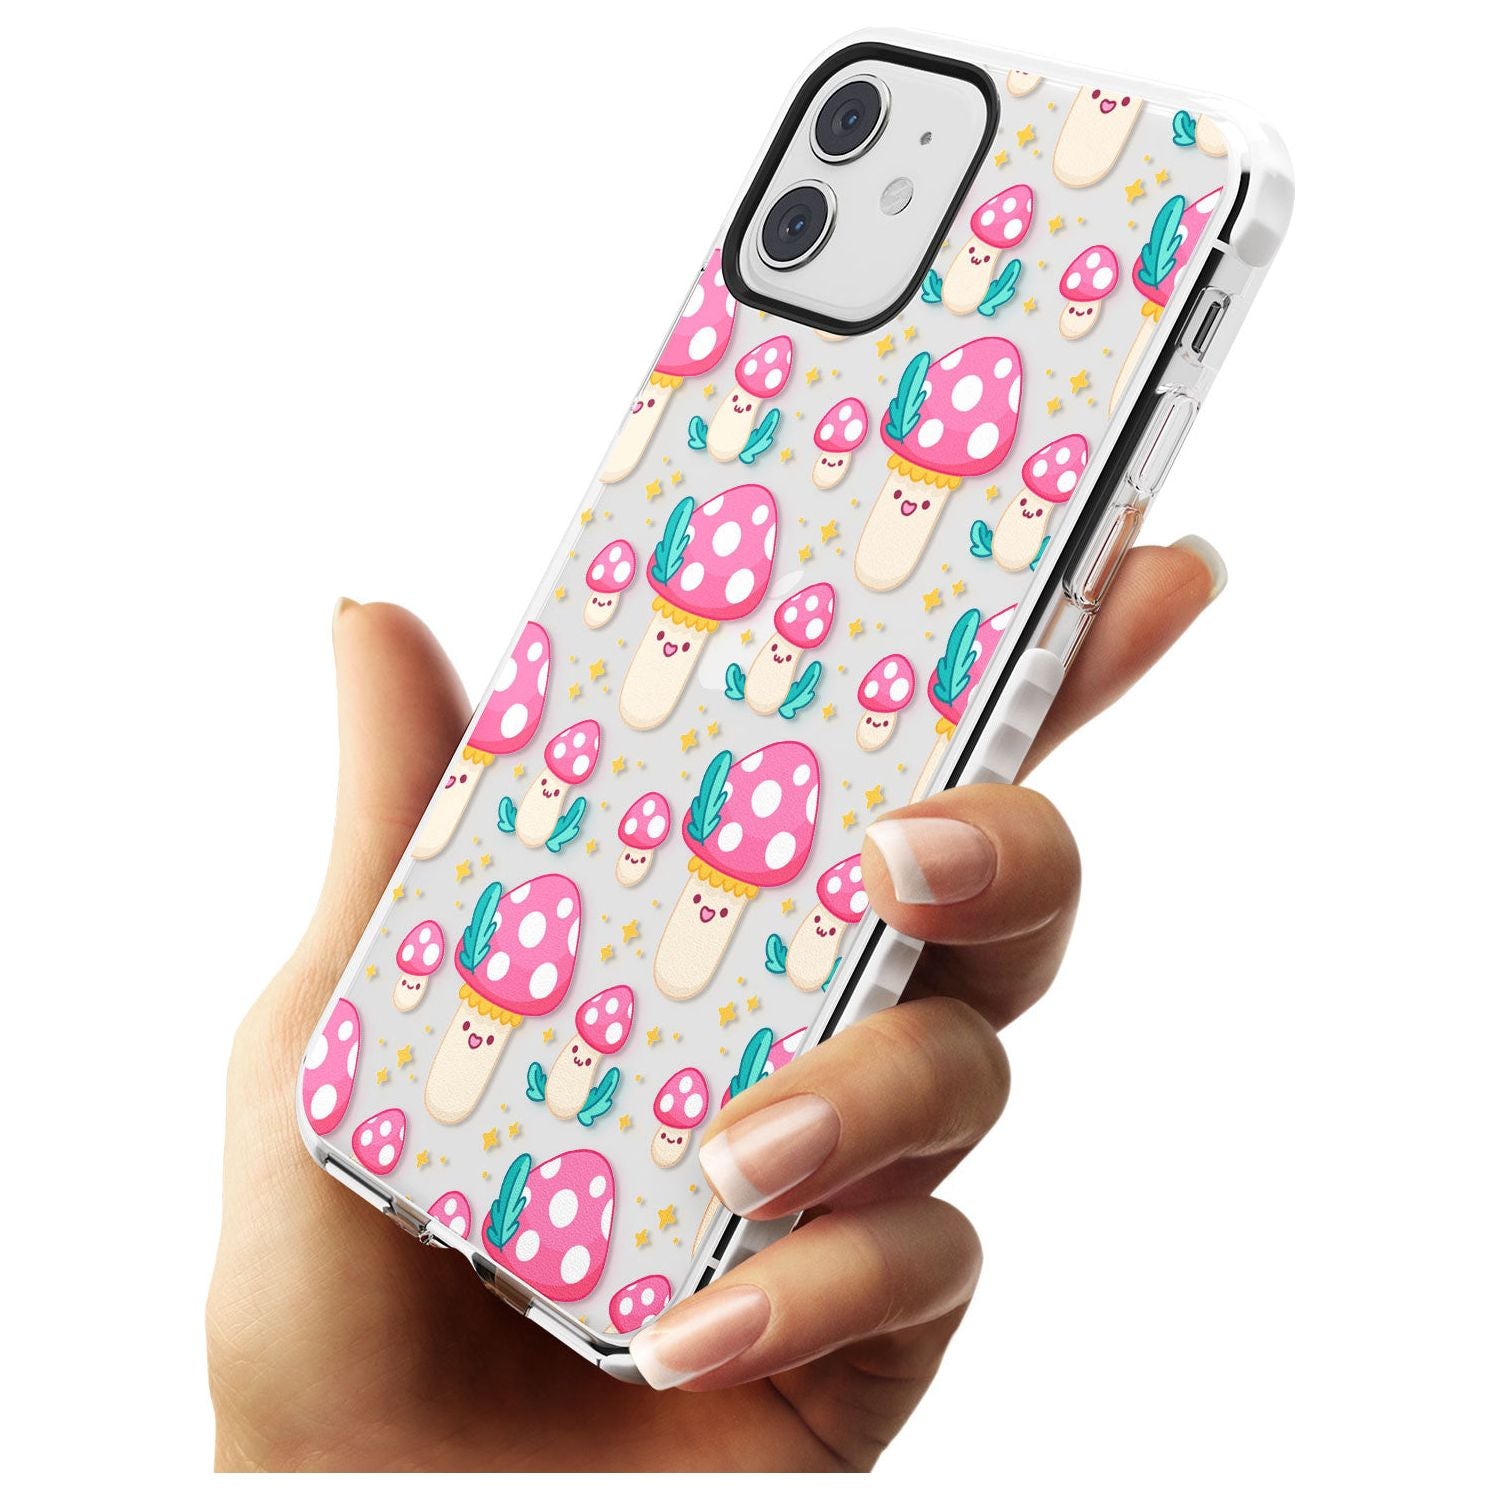 Cute Mushrooms Pattern Impact Phone Case for iPhone 11